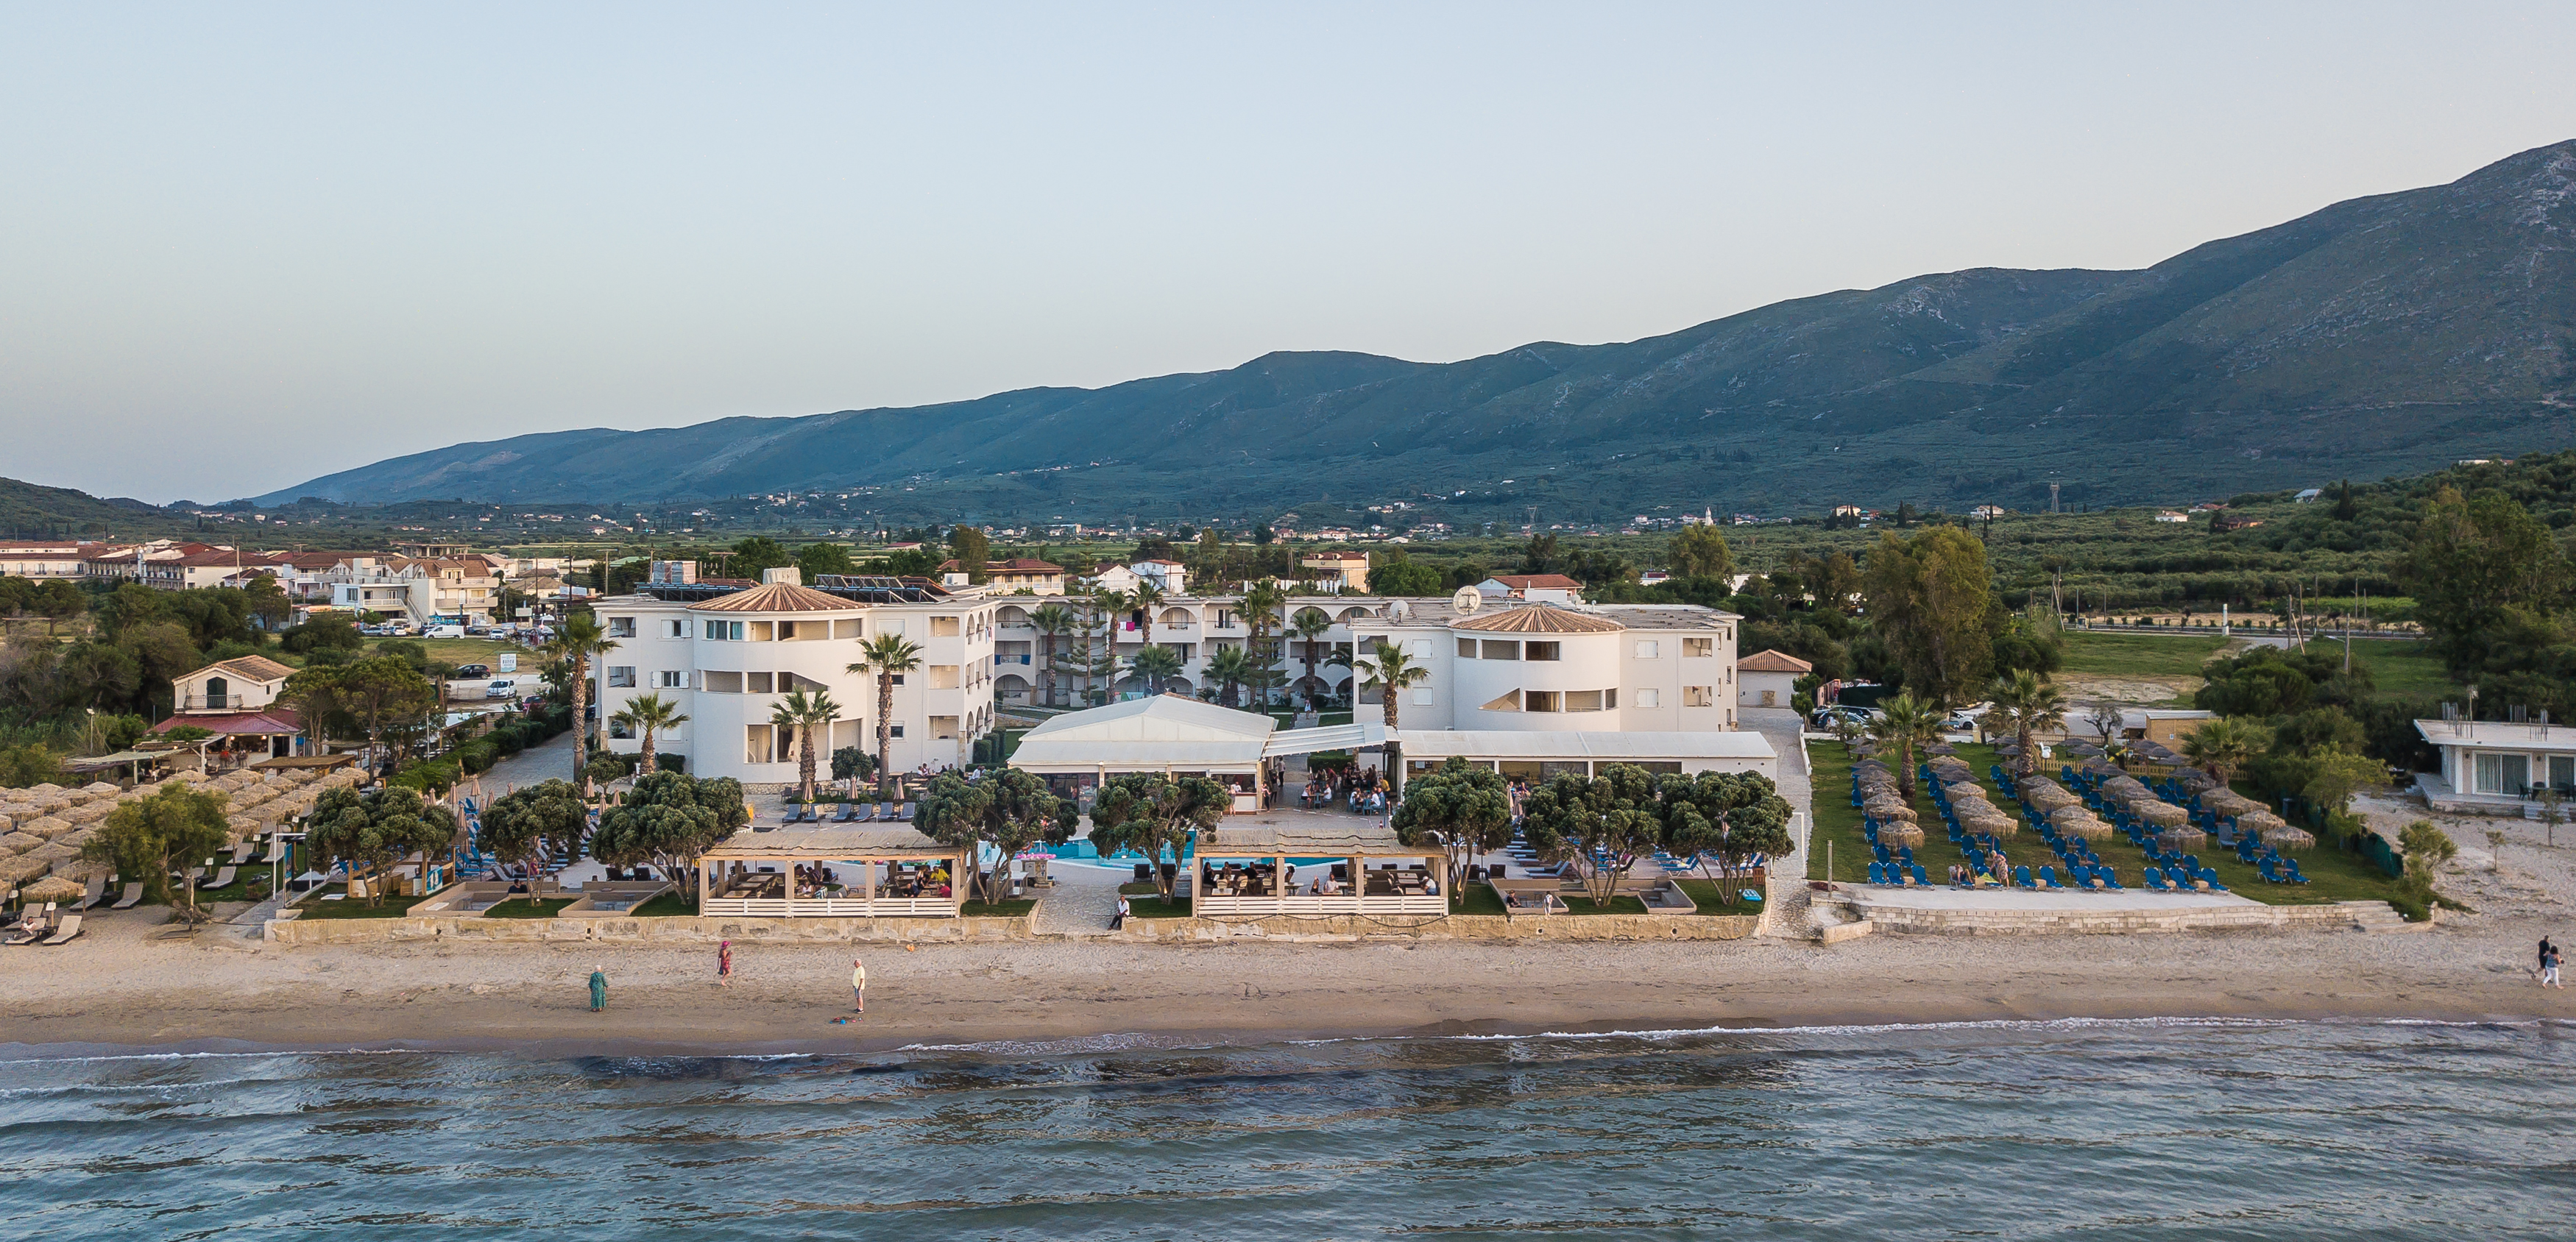 Alykanas Beach Grand Hotel- Ζάκυνθος ✦ -45% ✦ 3 Ημέρες (2 Διανυκτερεύσεις) ✦ 2 άτομα + 1 παιδί έως 12 ετών ✦ 12 ✦ 01/05/2023 έως 31/05/2023 και 29/09/2023 έως 31/10/2023 ✦ Μπροστά στην Παραλία!